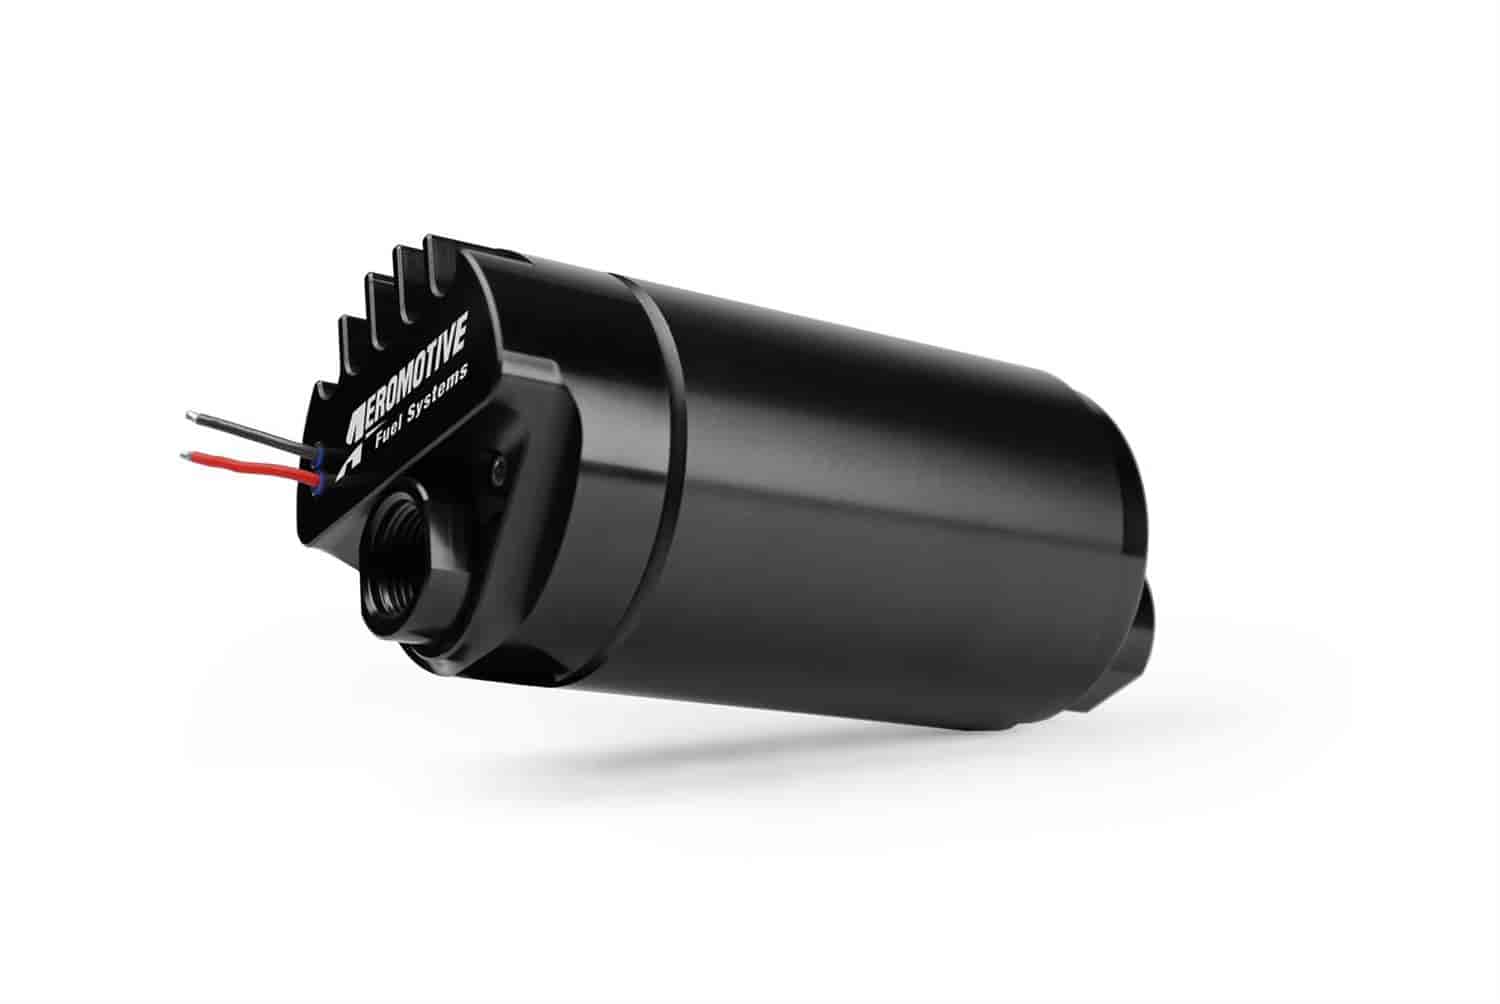 Eliminator External Variable Speed Fuel Pump Round Housing, Brushless Motor